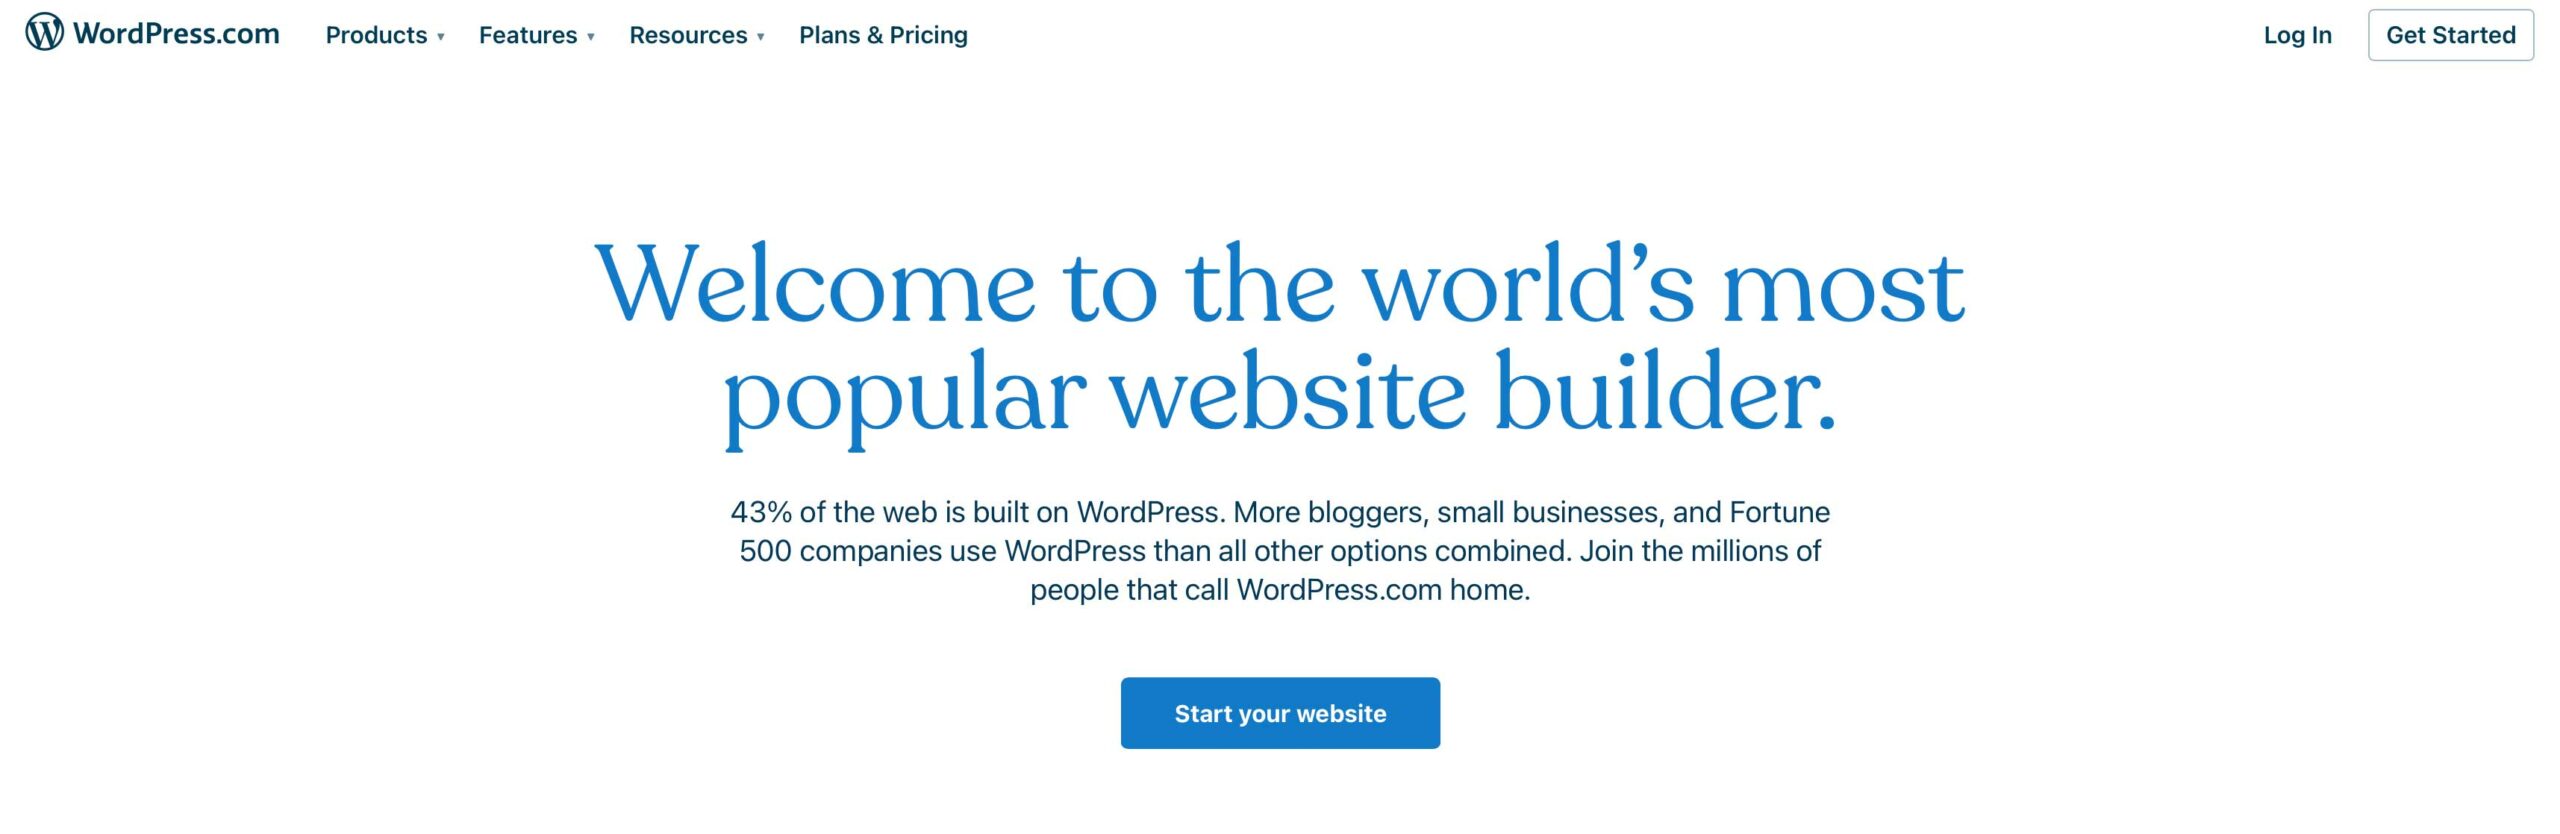 WordPress.com blogging platform